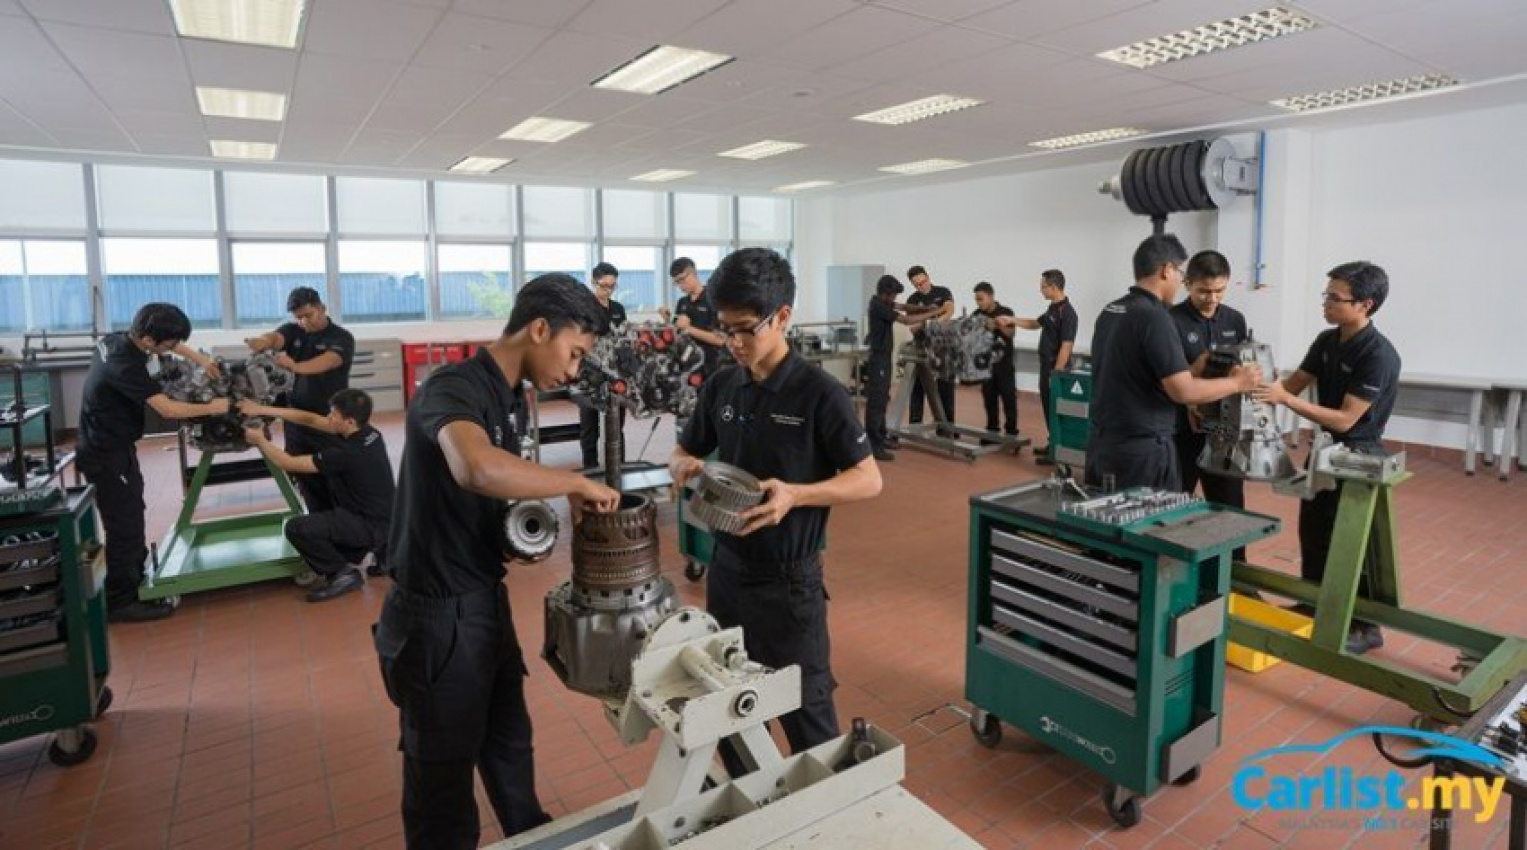 autos, cars, auto news, mercedes, mercedes-benz, mercedes-benz malaysia, mbm training academy celebrates graduation of newest apprentices